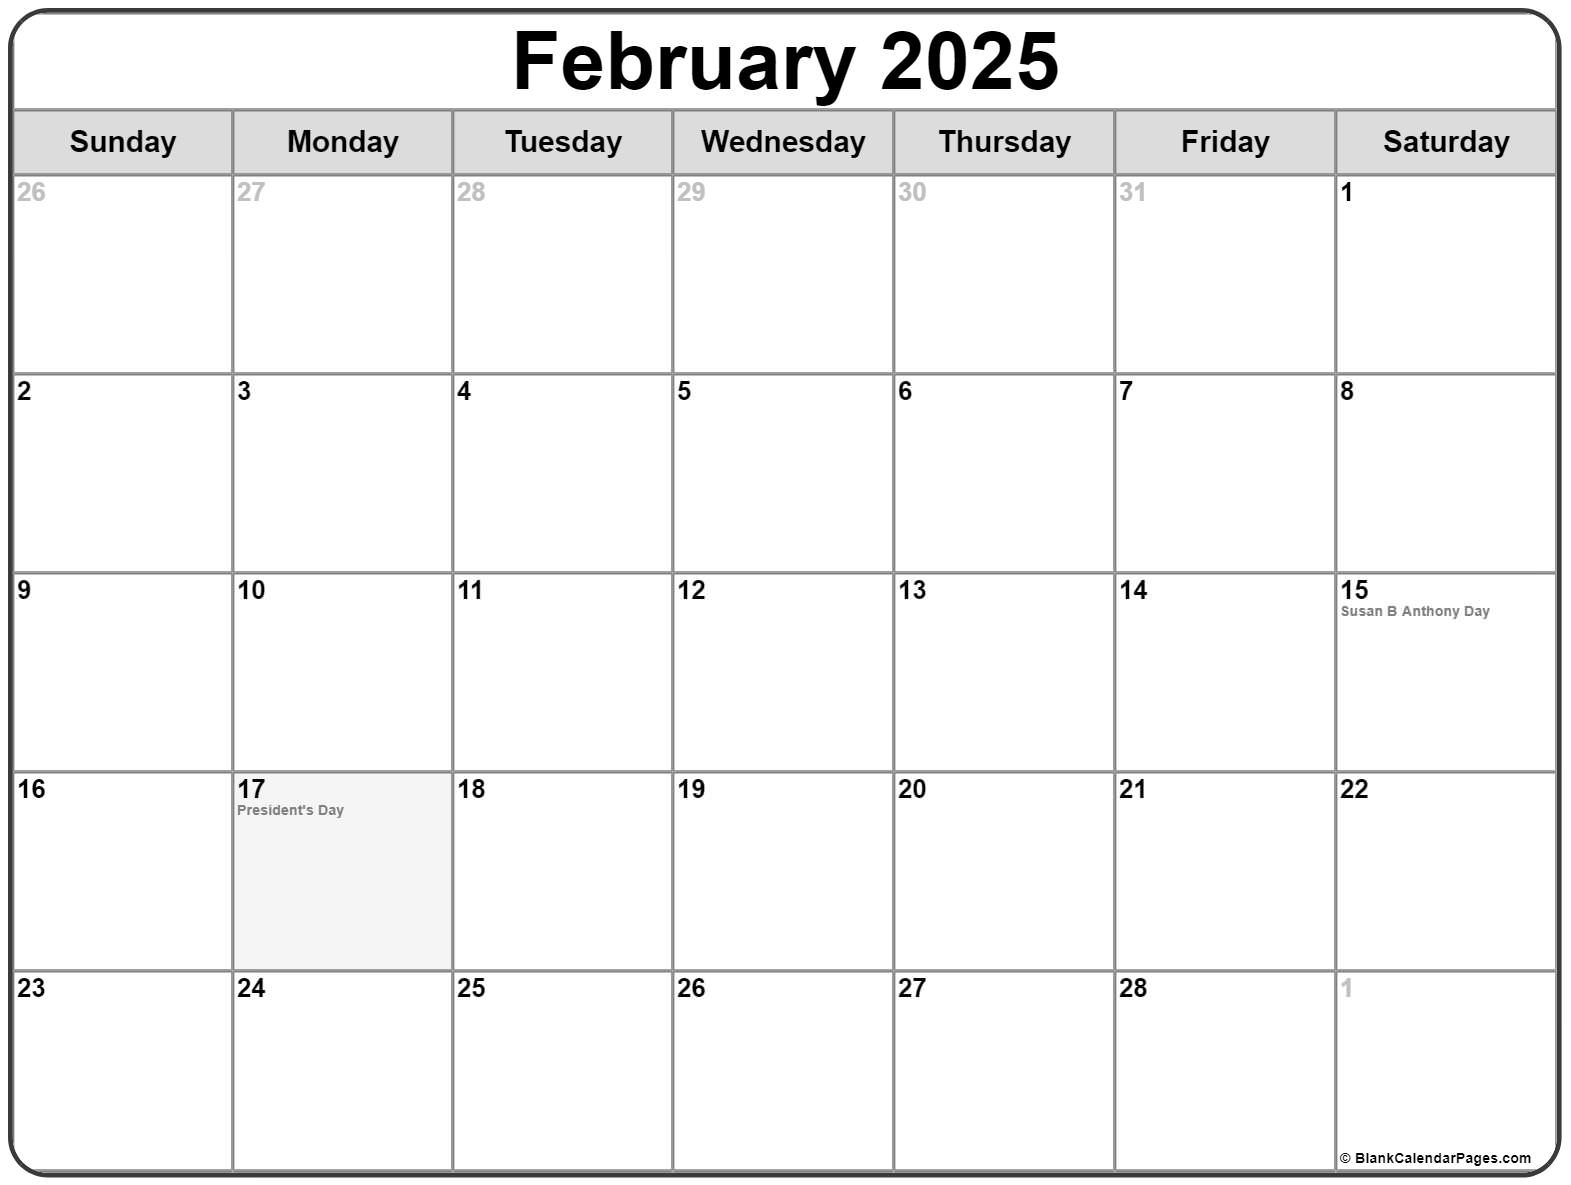 February Calendar 2025 With Holidays